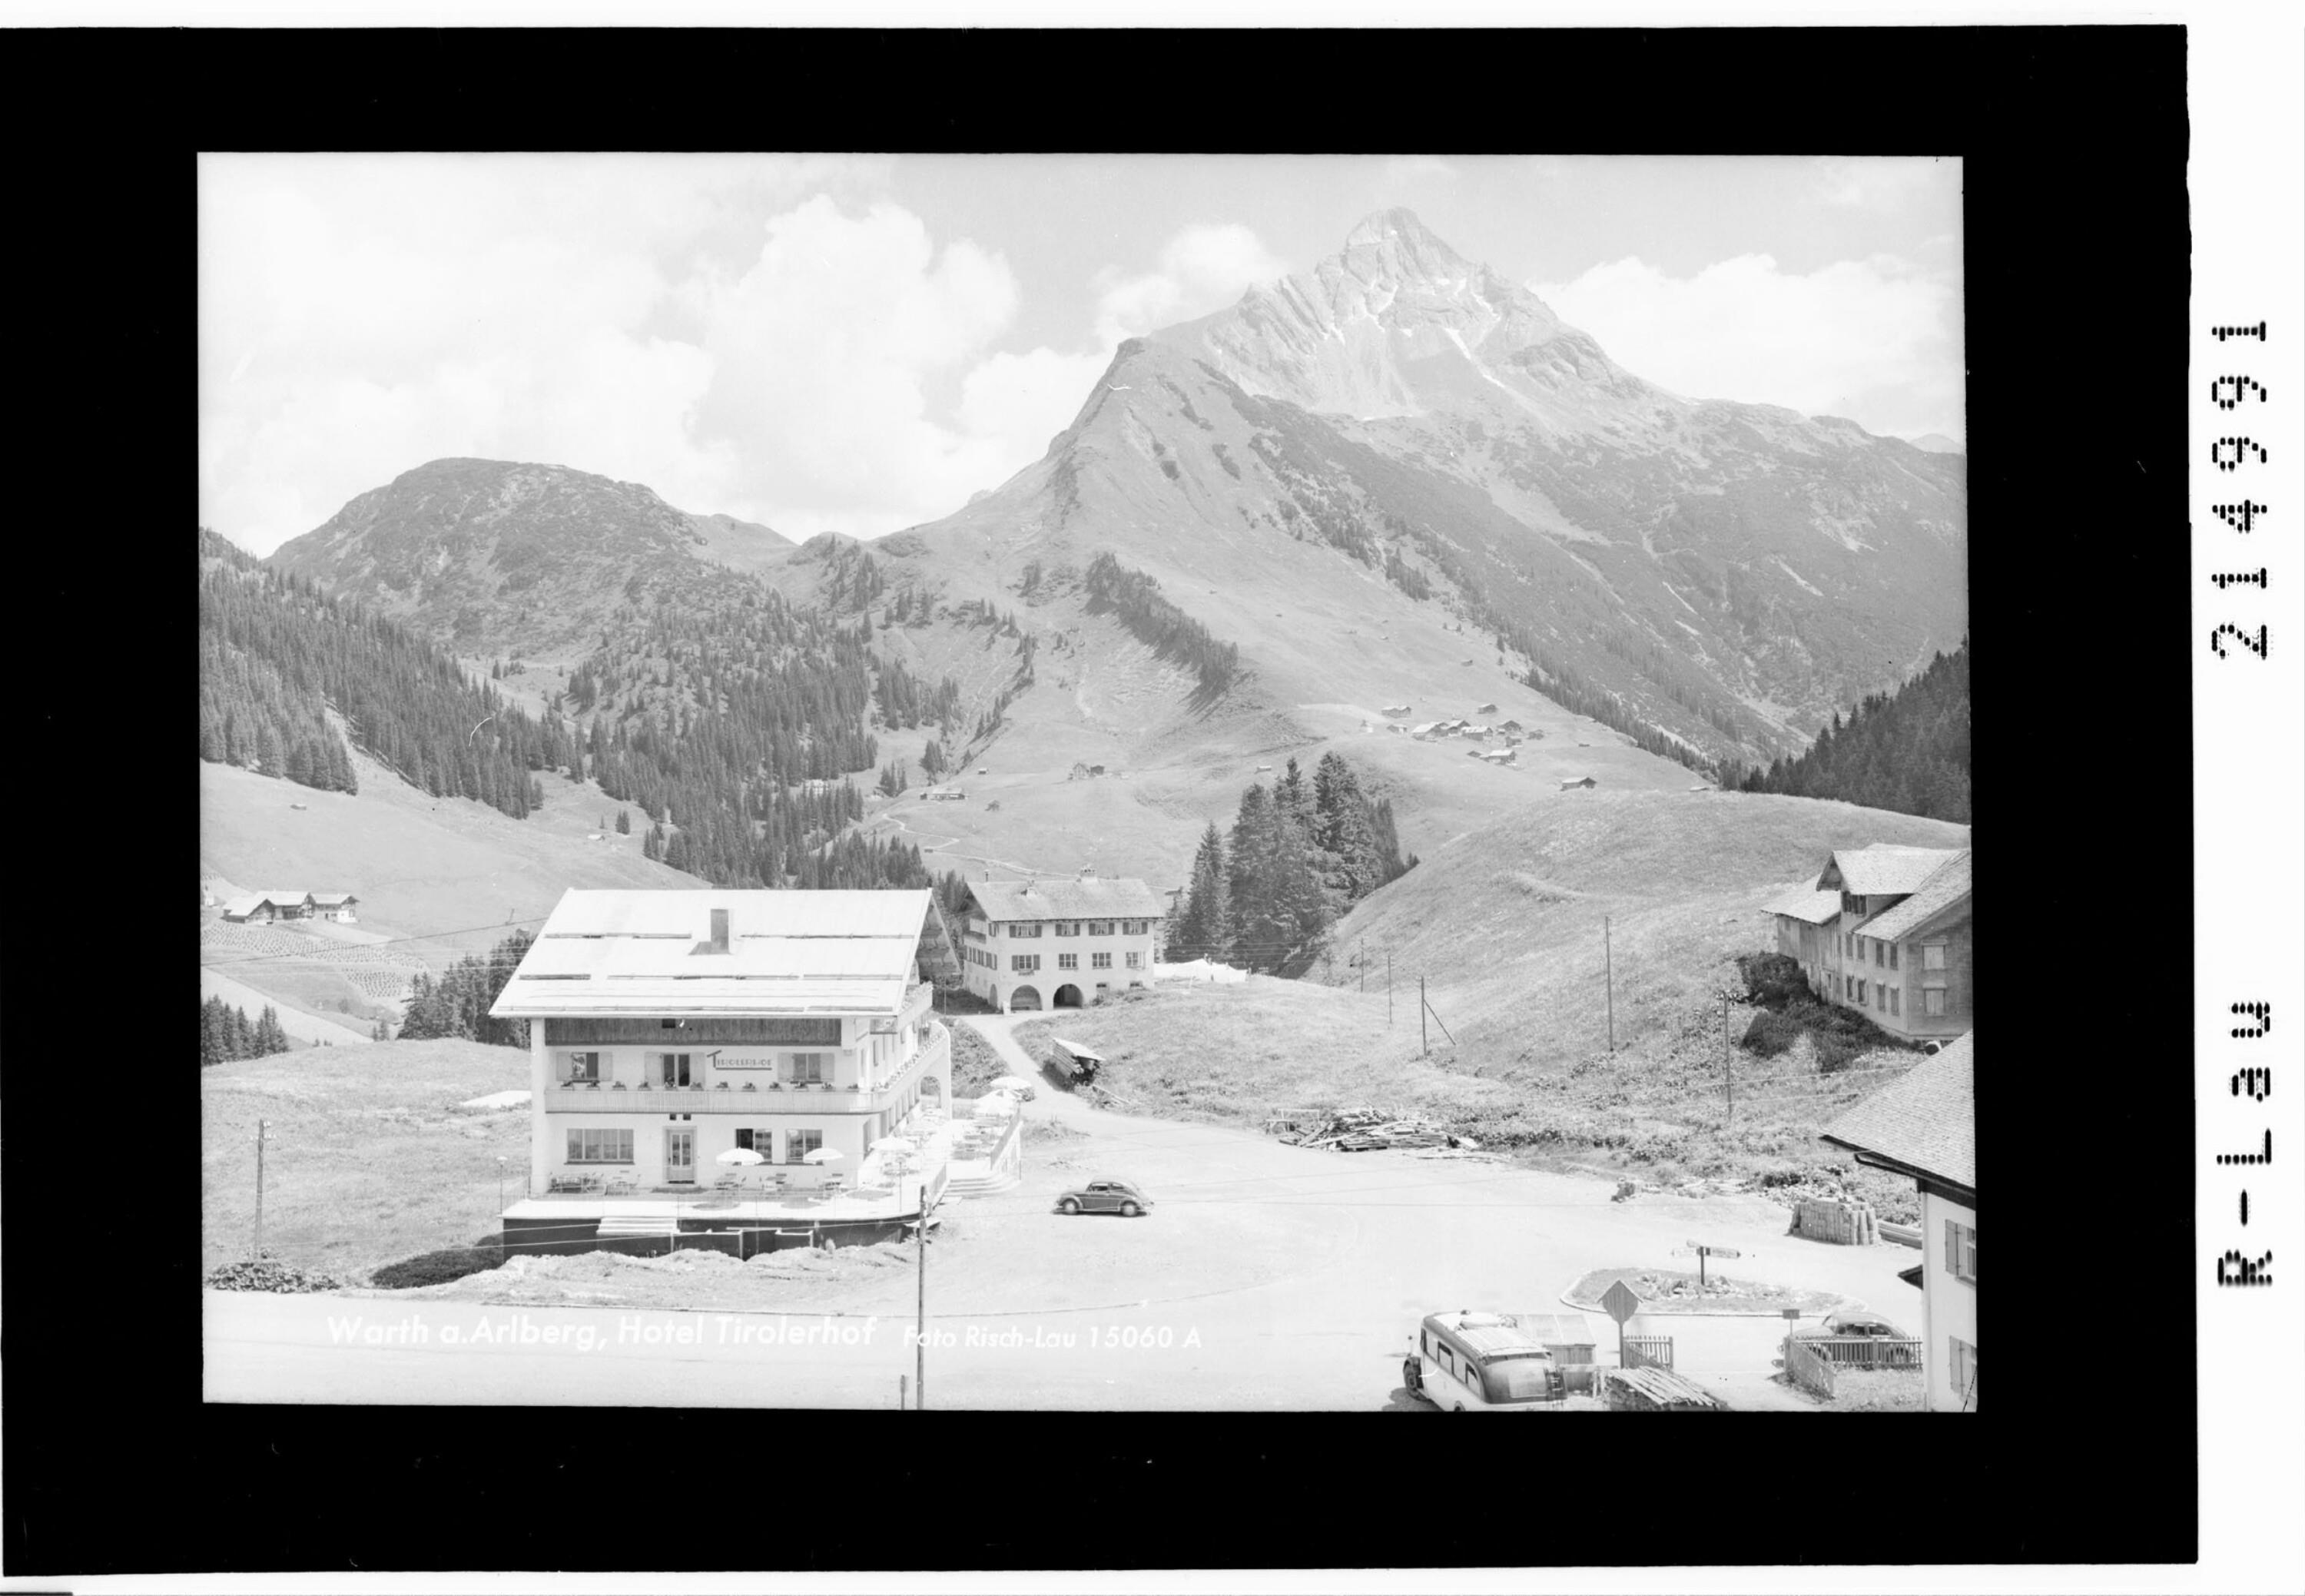 Warth am Arlberg / Hotel Tirolerhof></div>


    <hr>
    <div class=